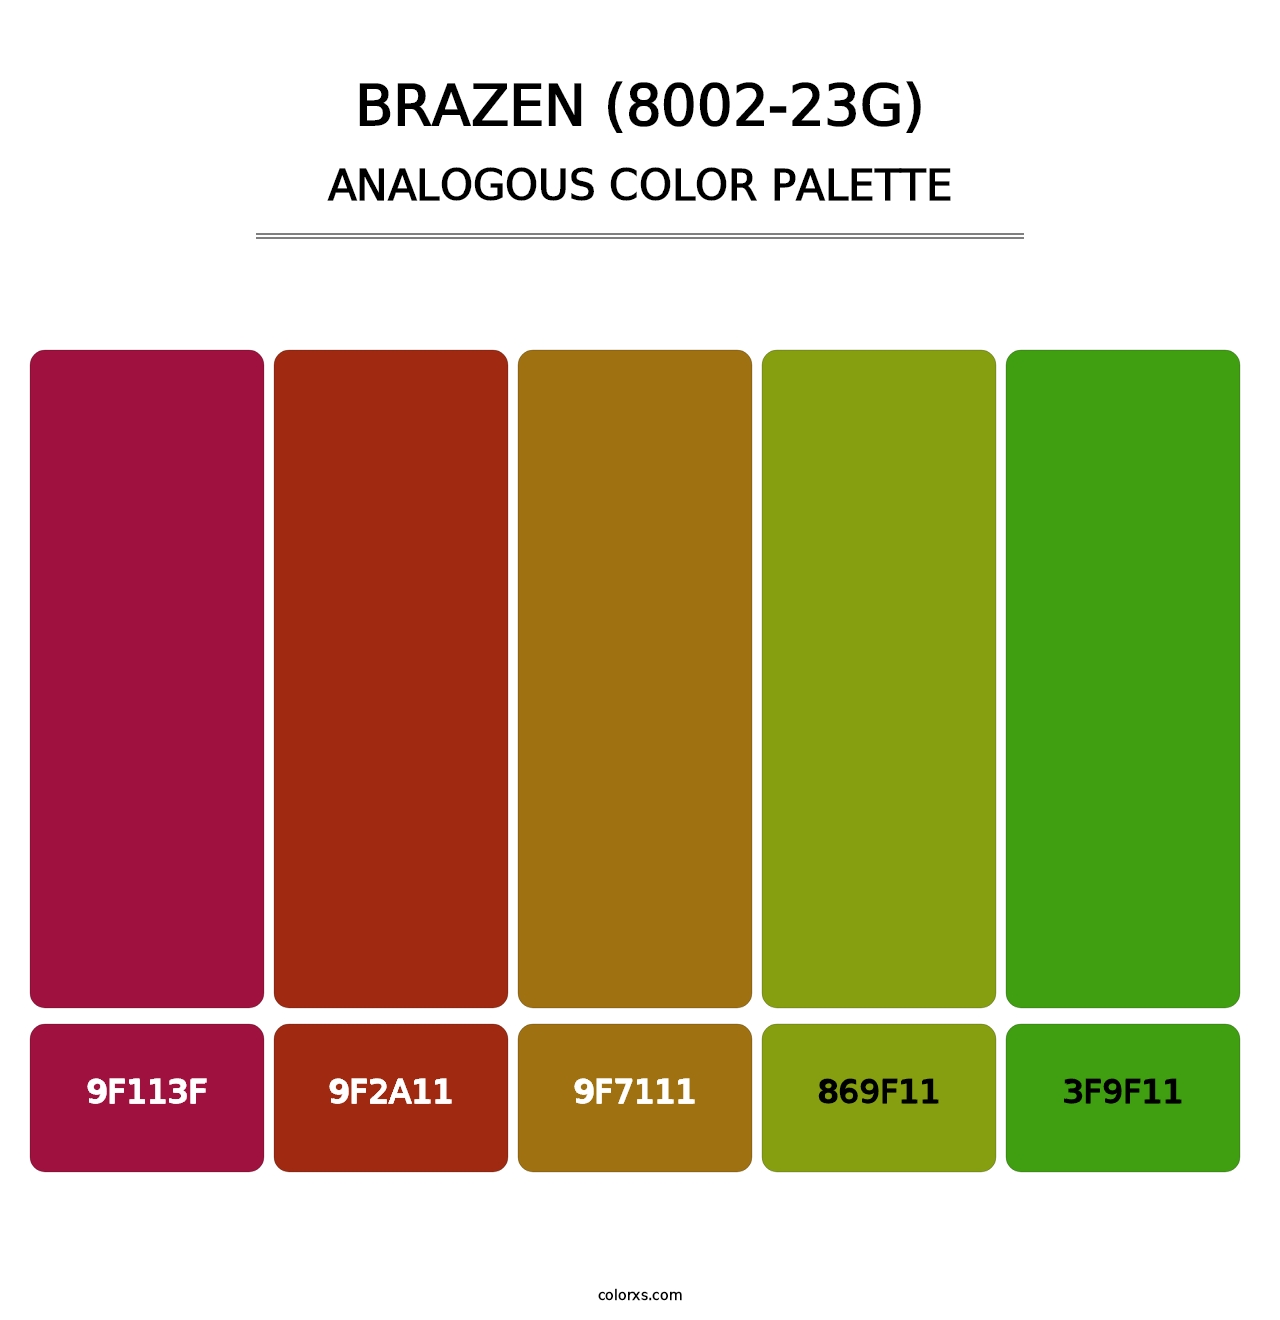 Brazen (8002-23G) - Analogous Color Palette